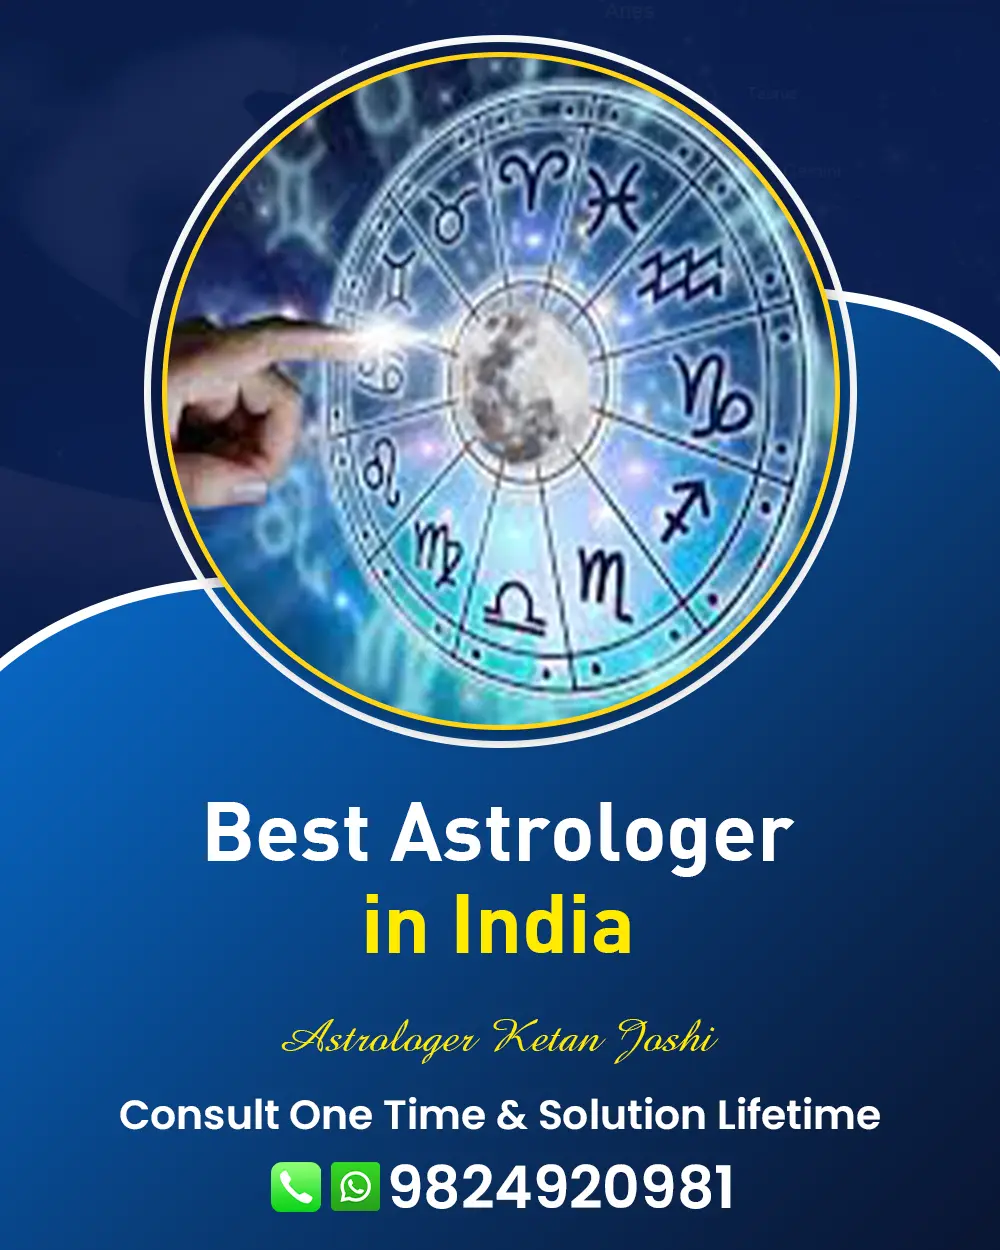 No. 1 Astrologer in India